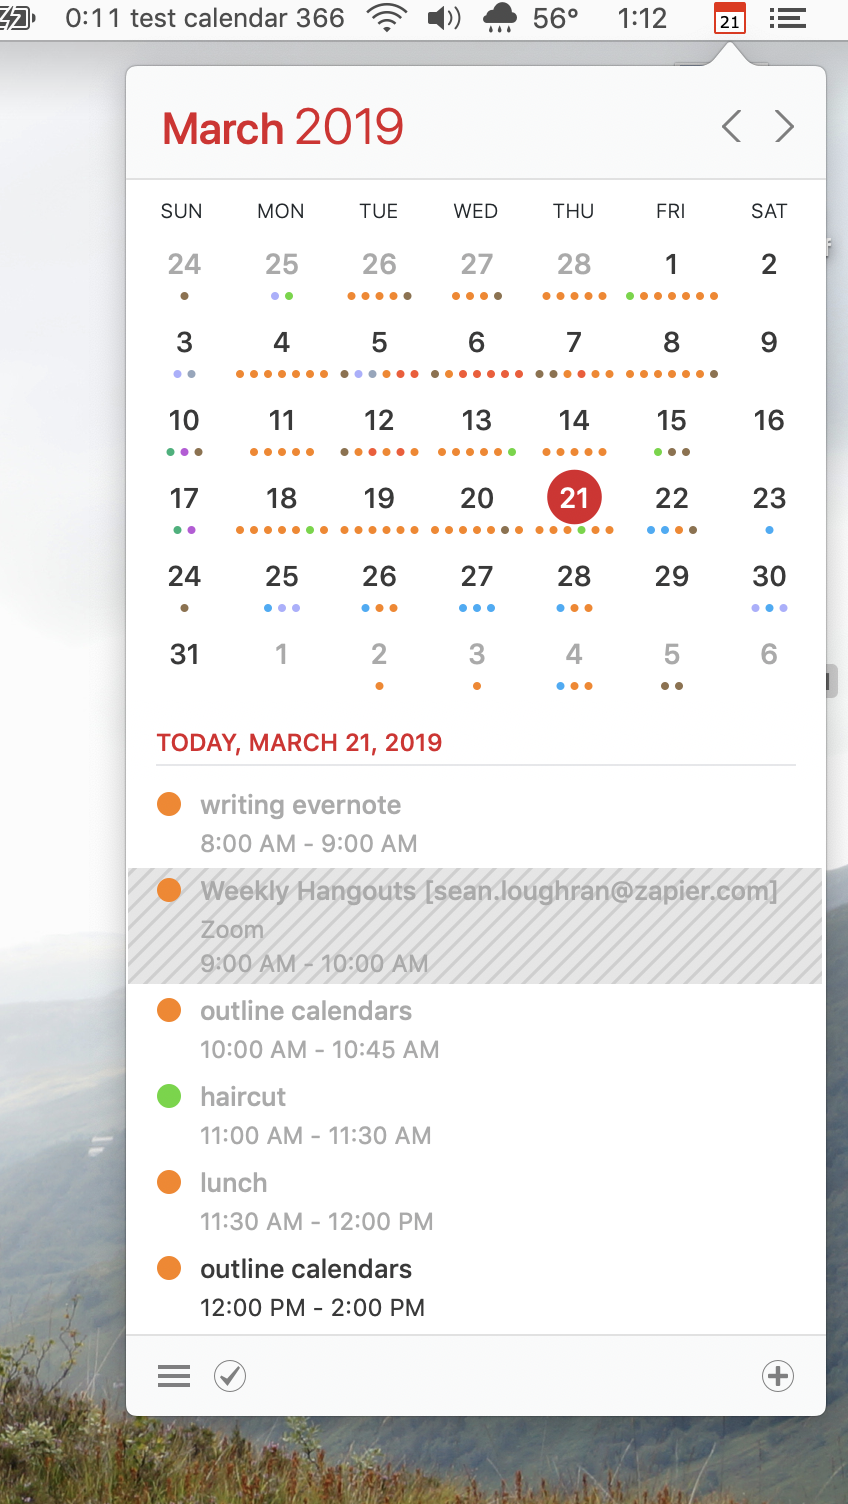 Best outlook calendar app for mac and windows